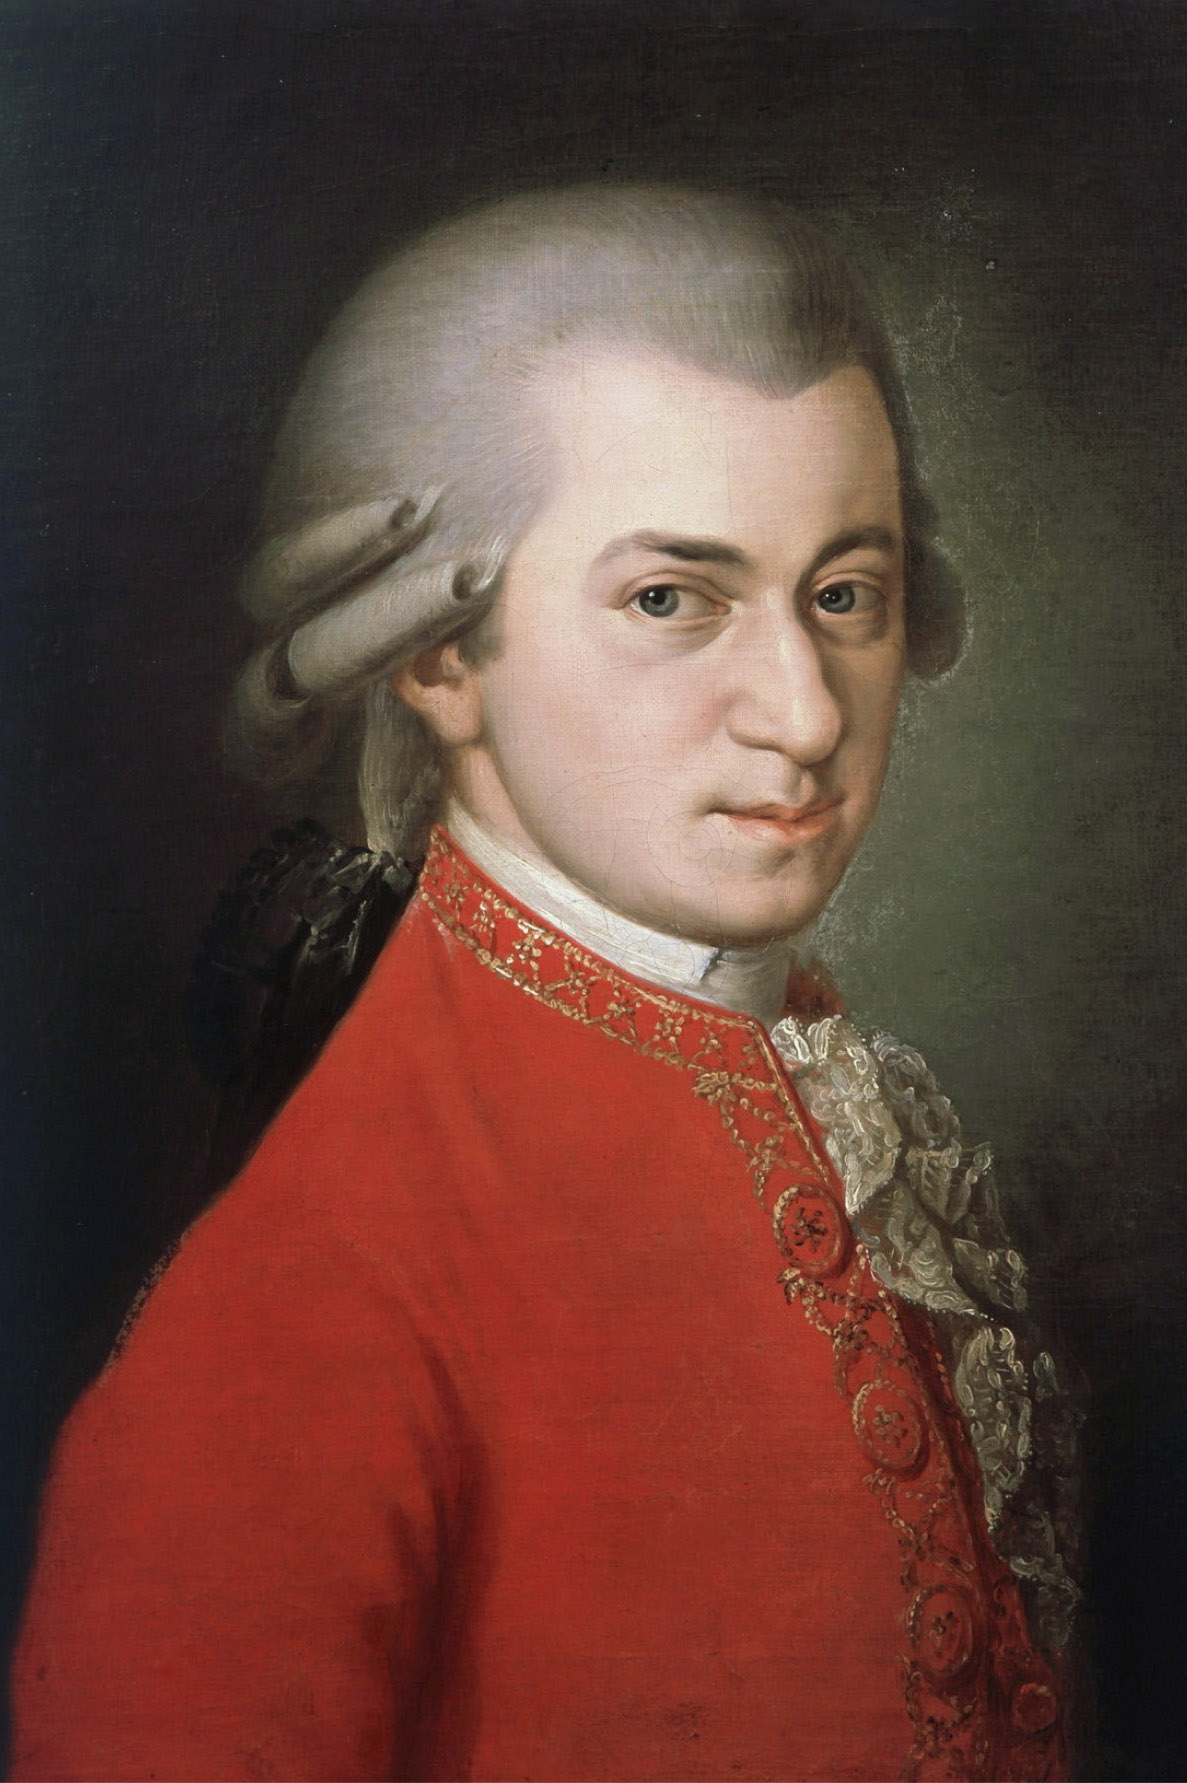 Mozart (composer) and Charles Bradlee (arrangement)